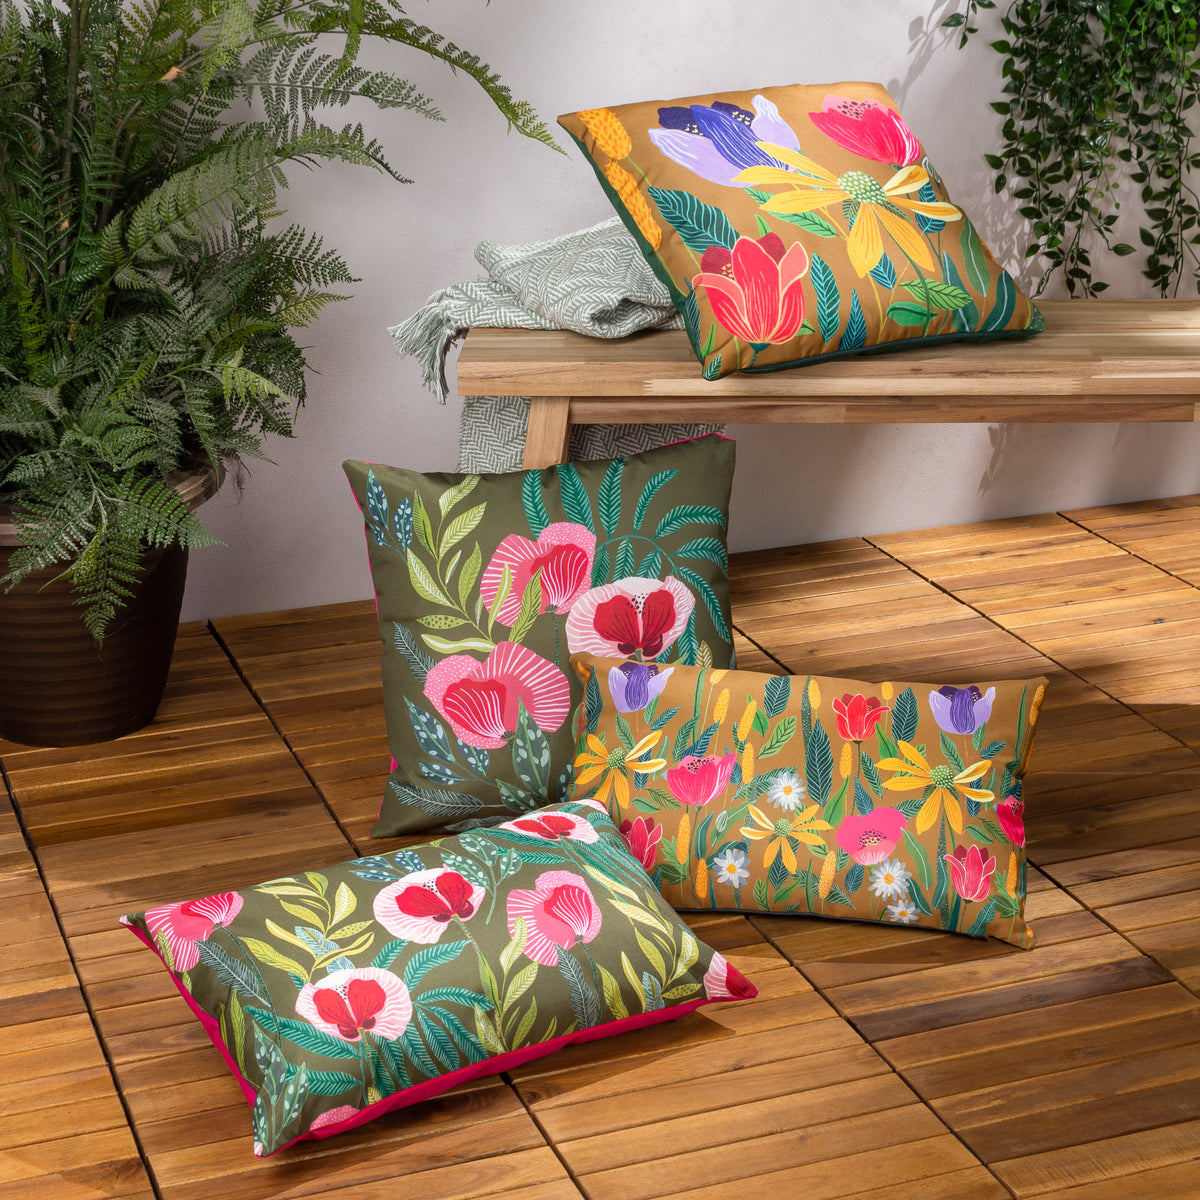 House of Bloom Celandine 50cm Outdoor Polyester Bolster Cushion